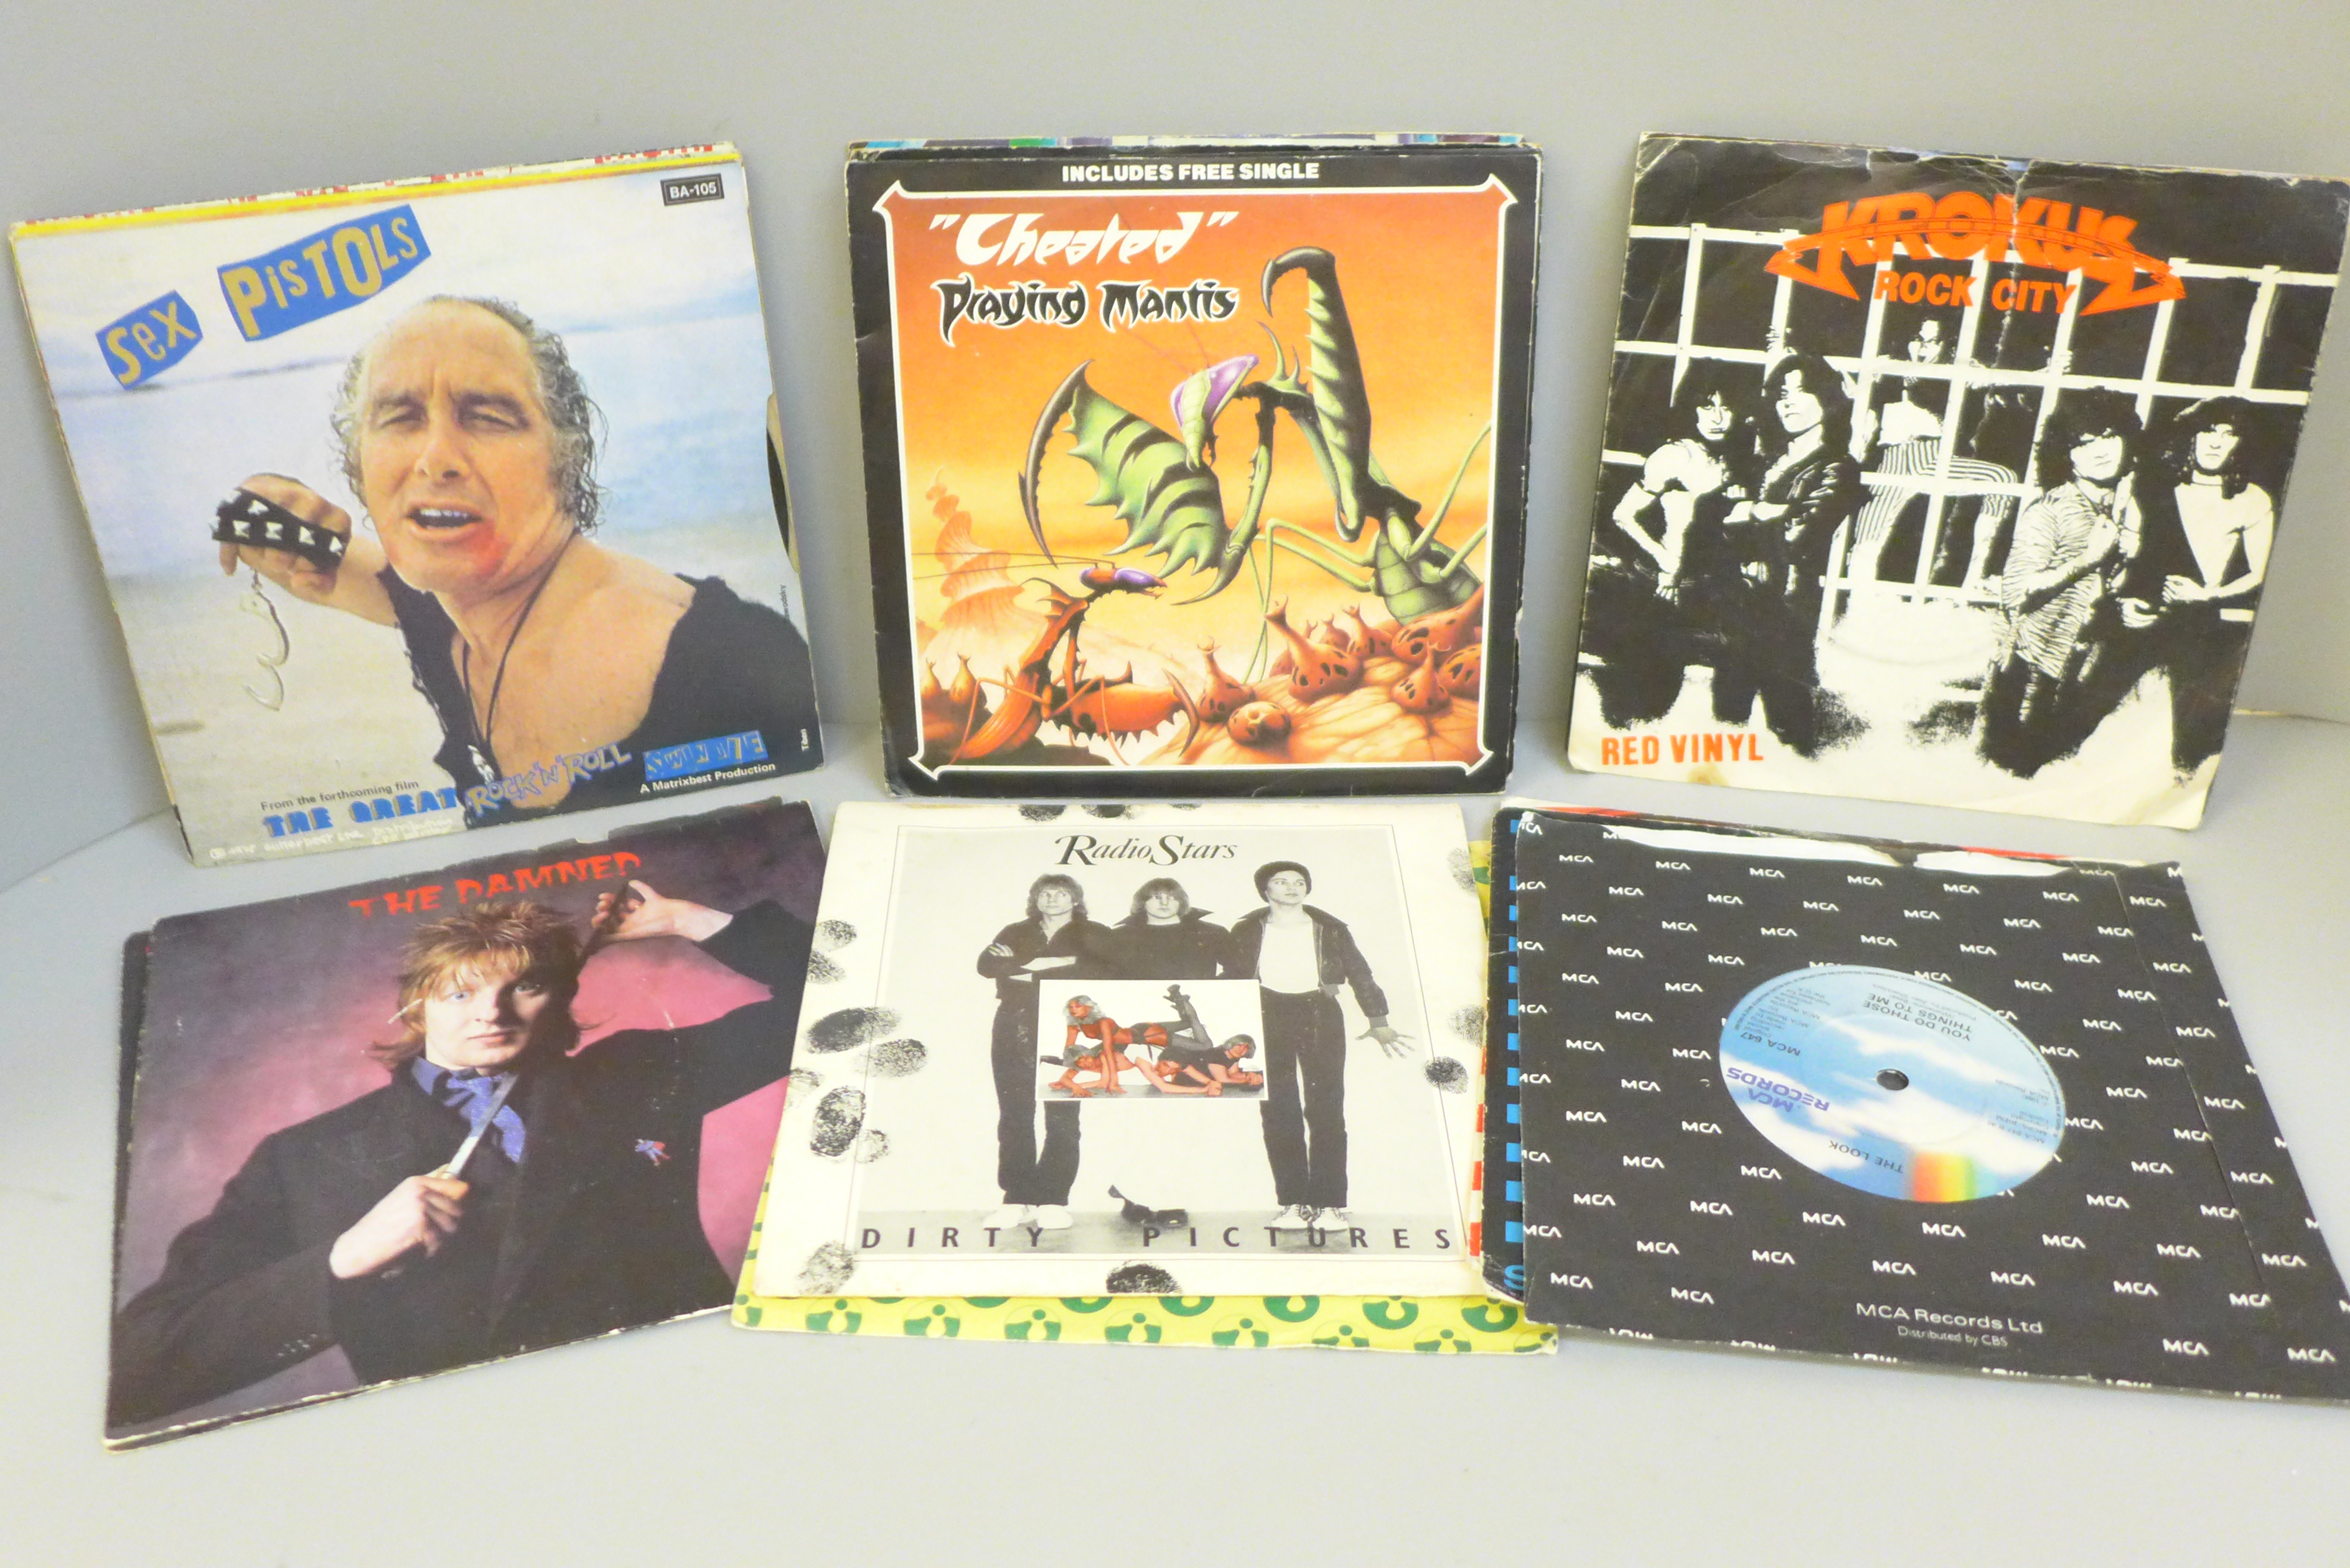 Twenty-seven vinyl 7" singles including Sex Pistols, The Damned, Banned, The Stranglers